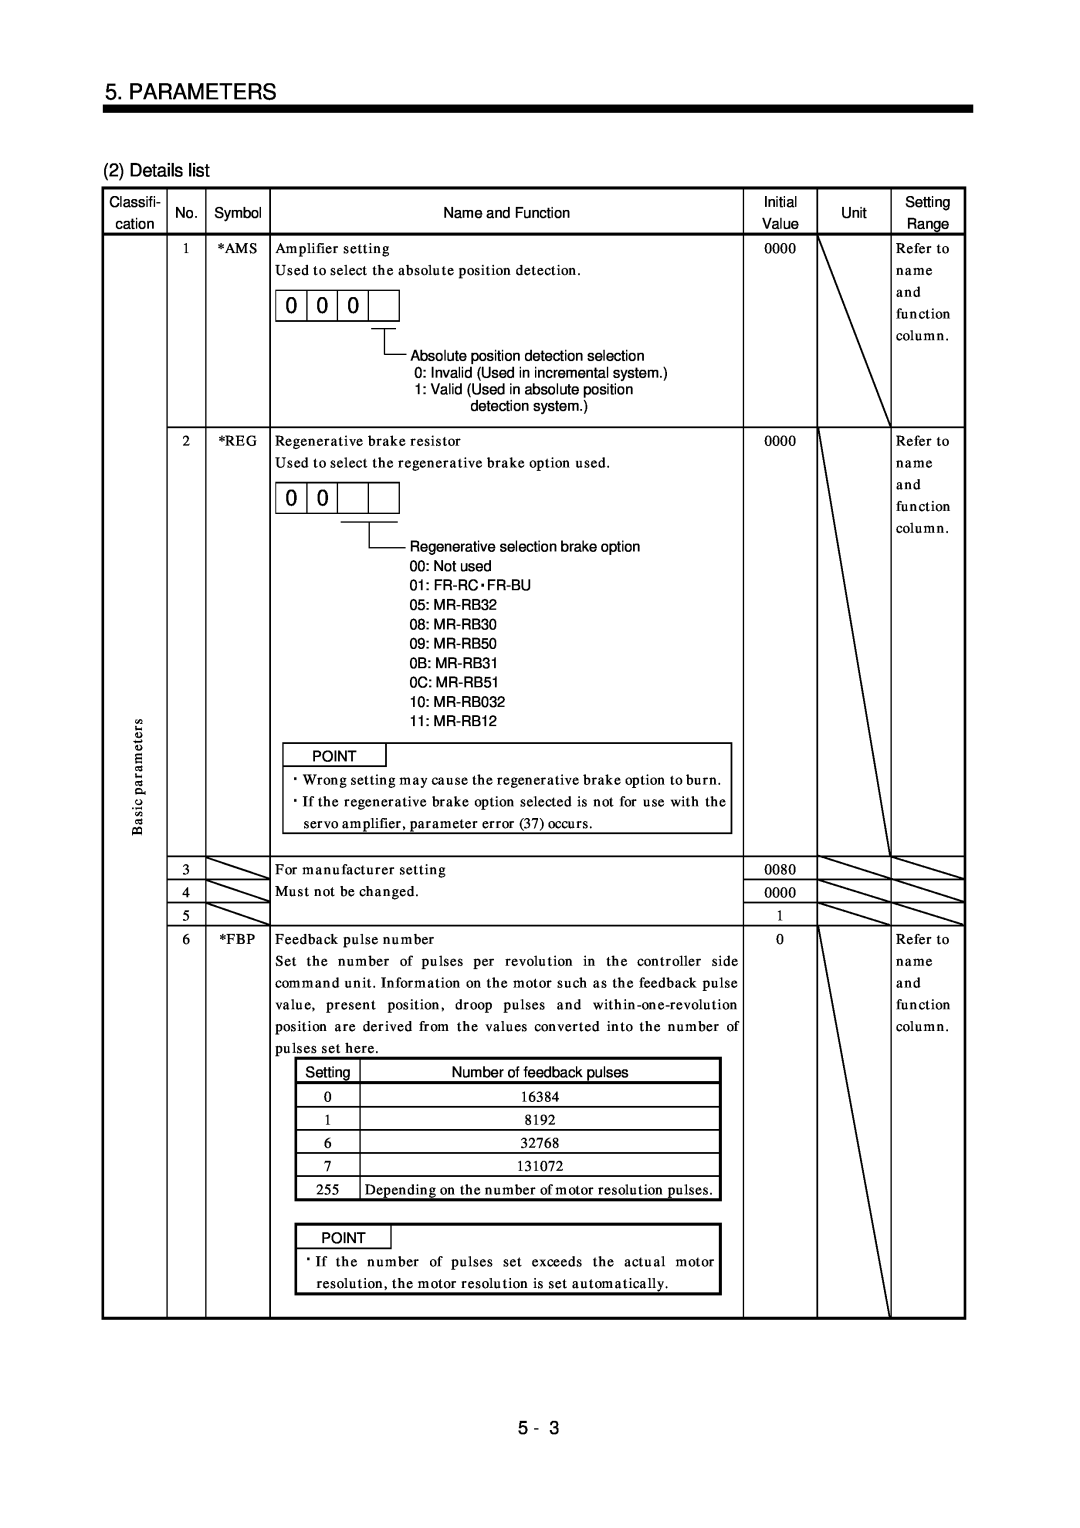 Bose MR-J2S- B instruction manual Details list, Parameters 